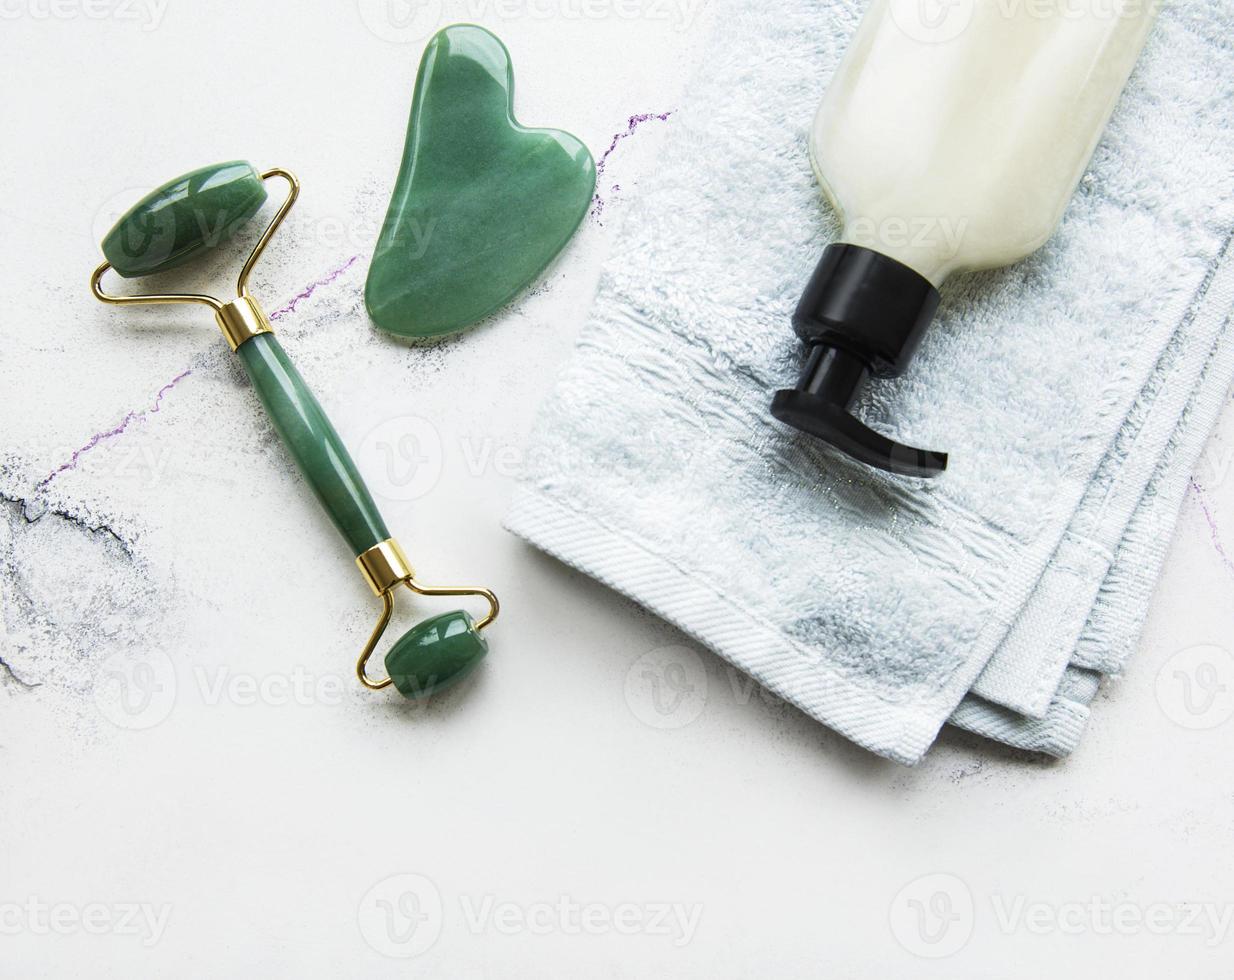 ansiktsmassage jade rulle med kosmetisk produkt på vit marmor bakgrund foto